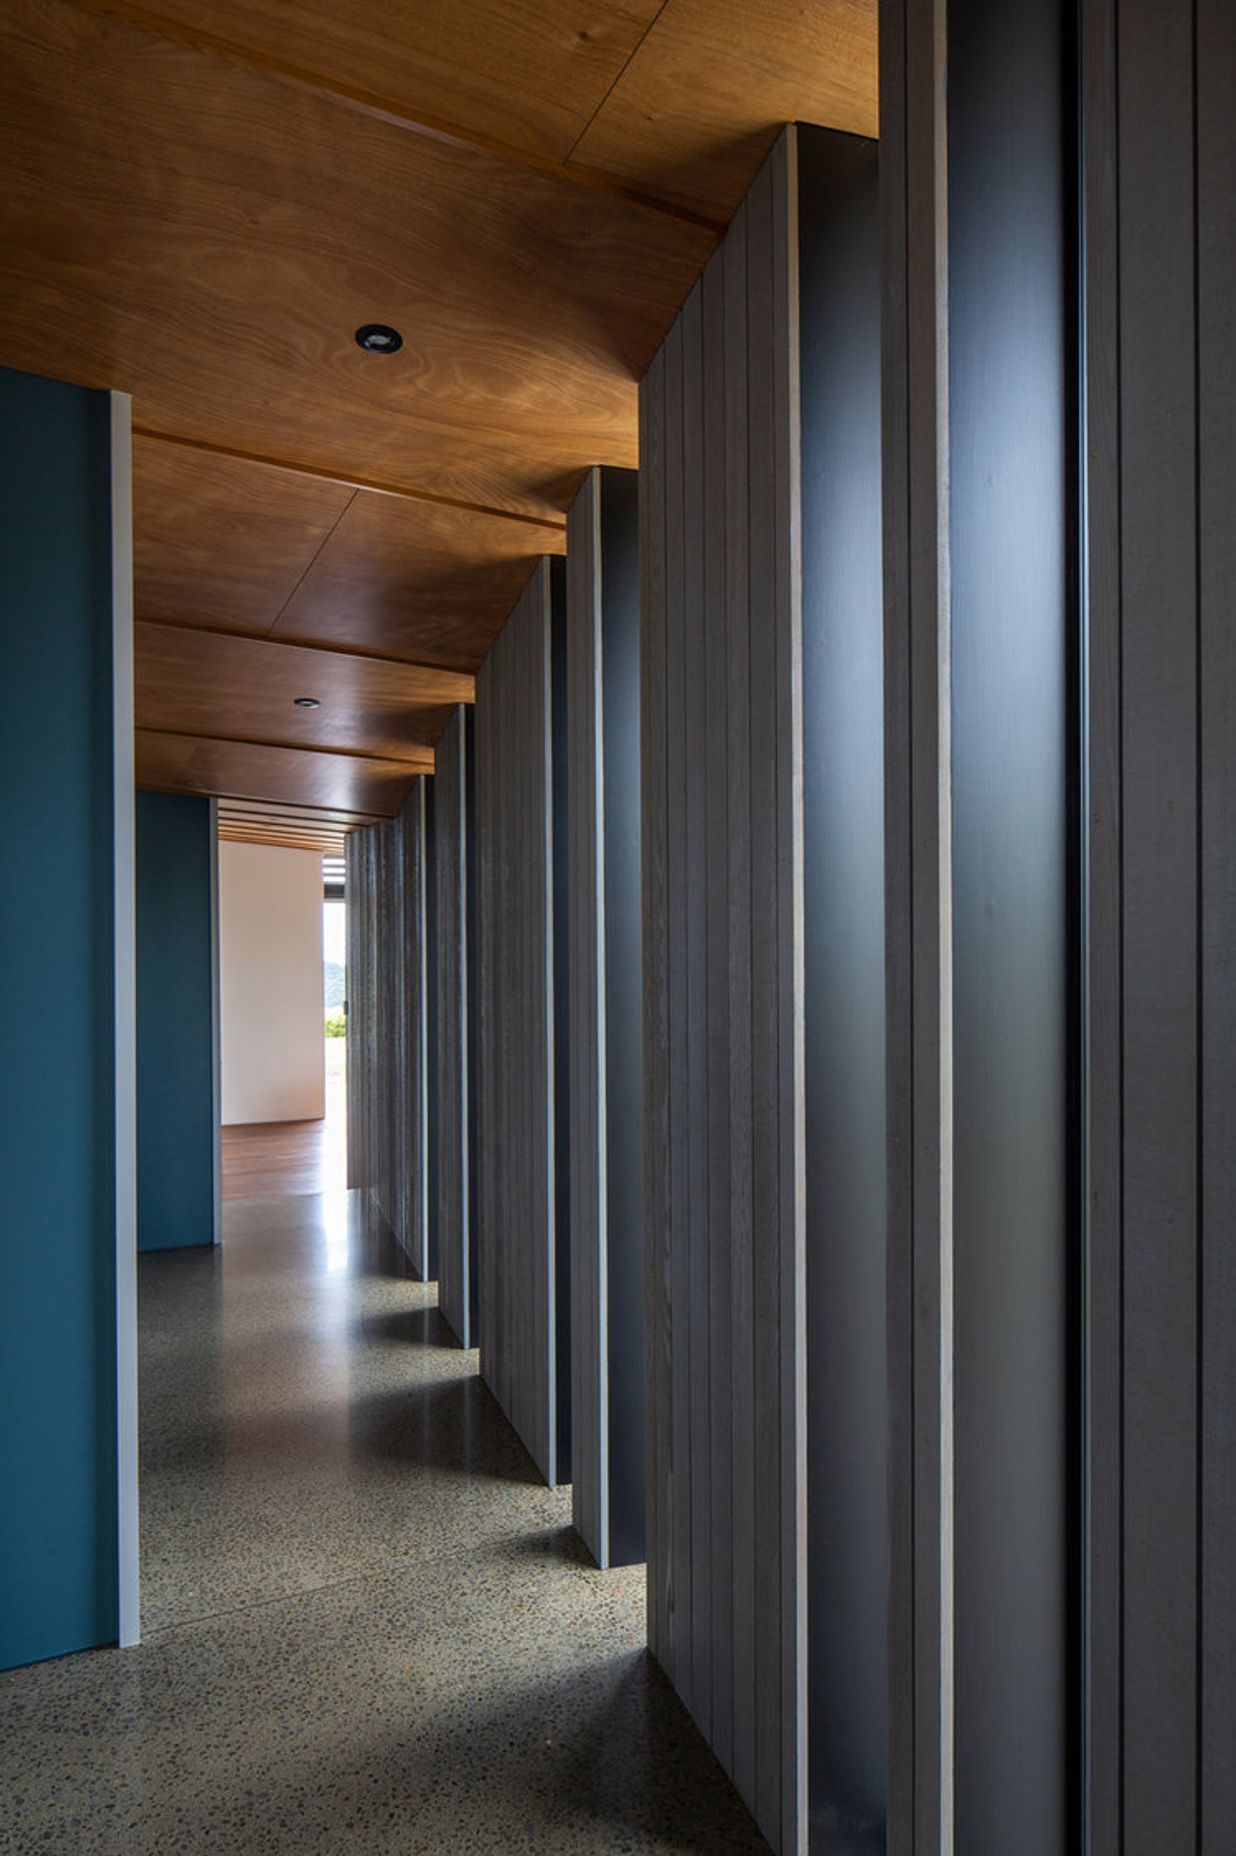 Full-length vertical windows along the hallway creates drama and adds light.